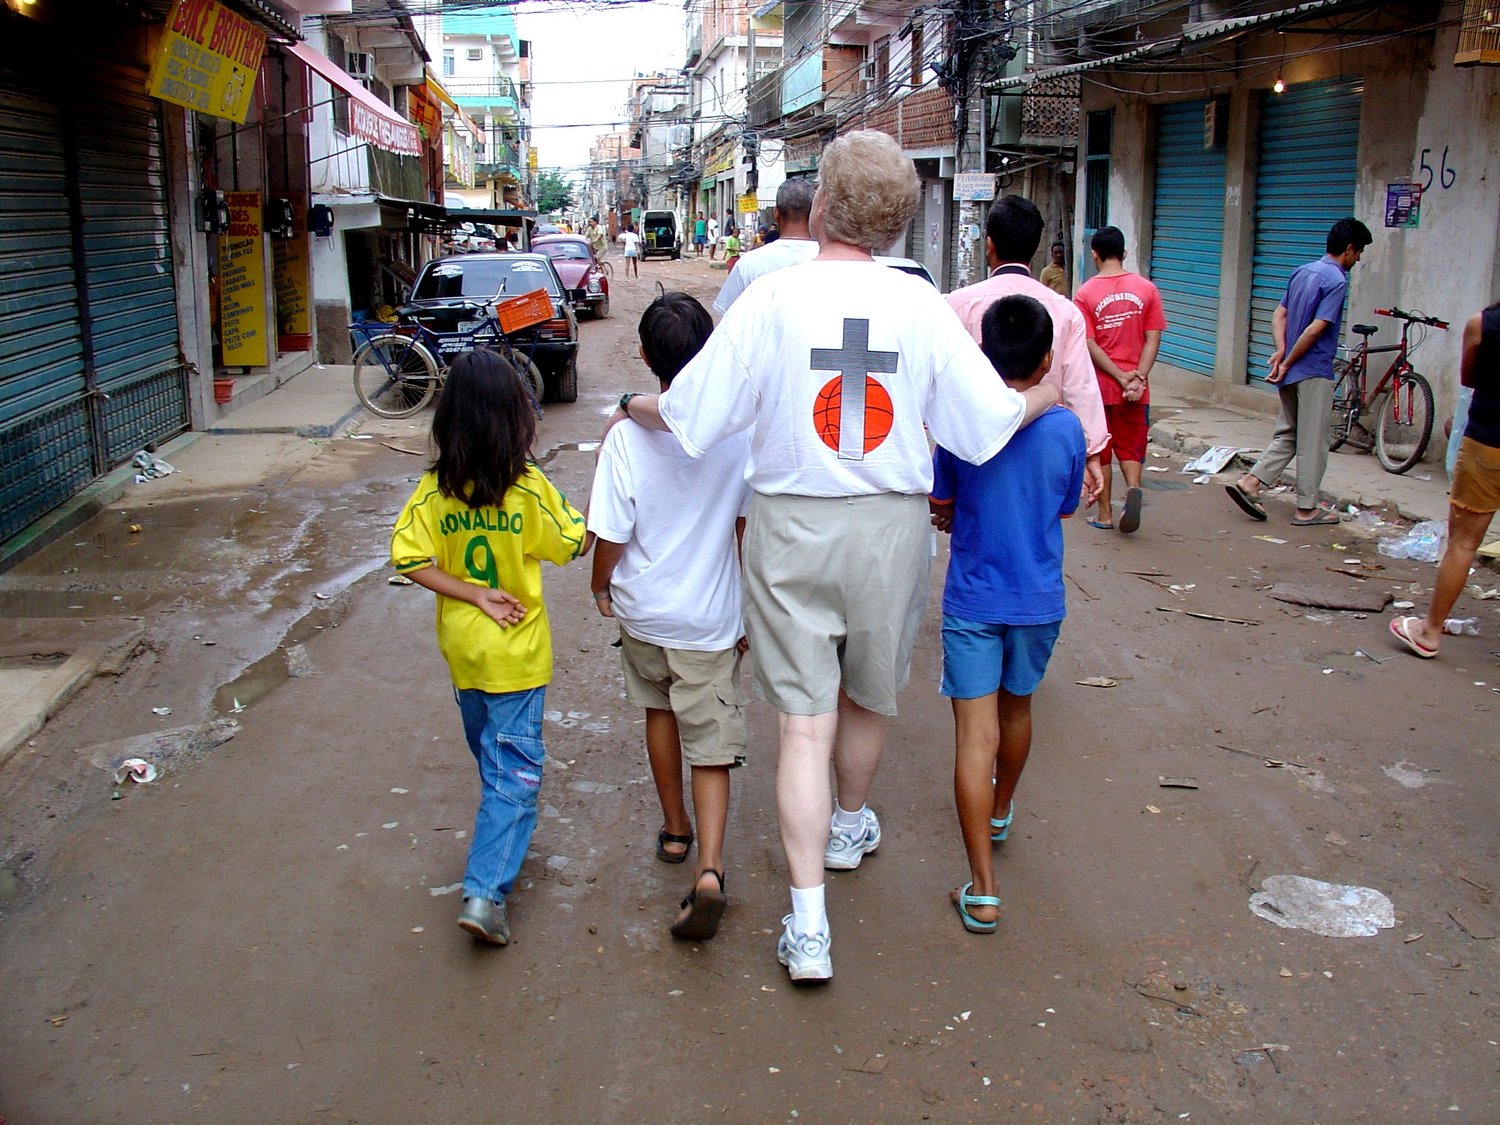 Betty Wiseman walks through a favela in Brazil on a mission trip. (Photo courtesy Betty Wiseman)